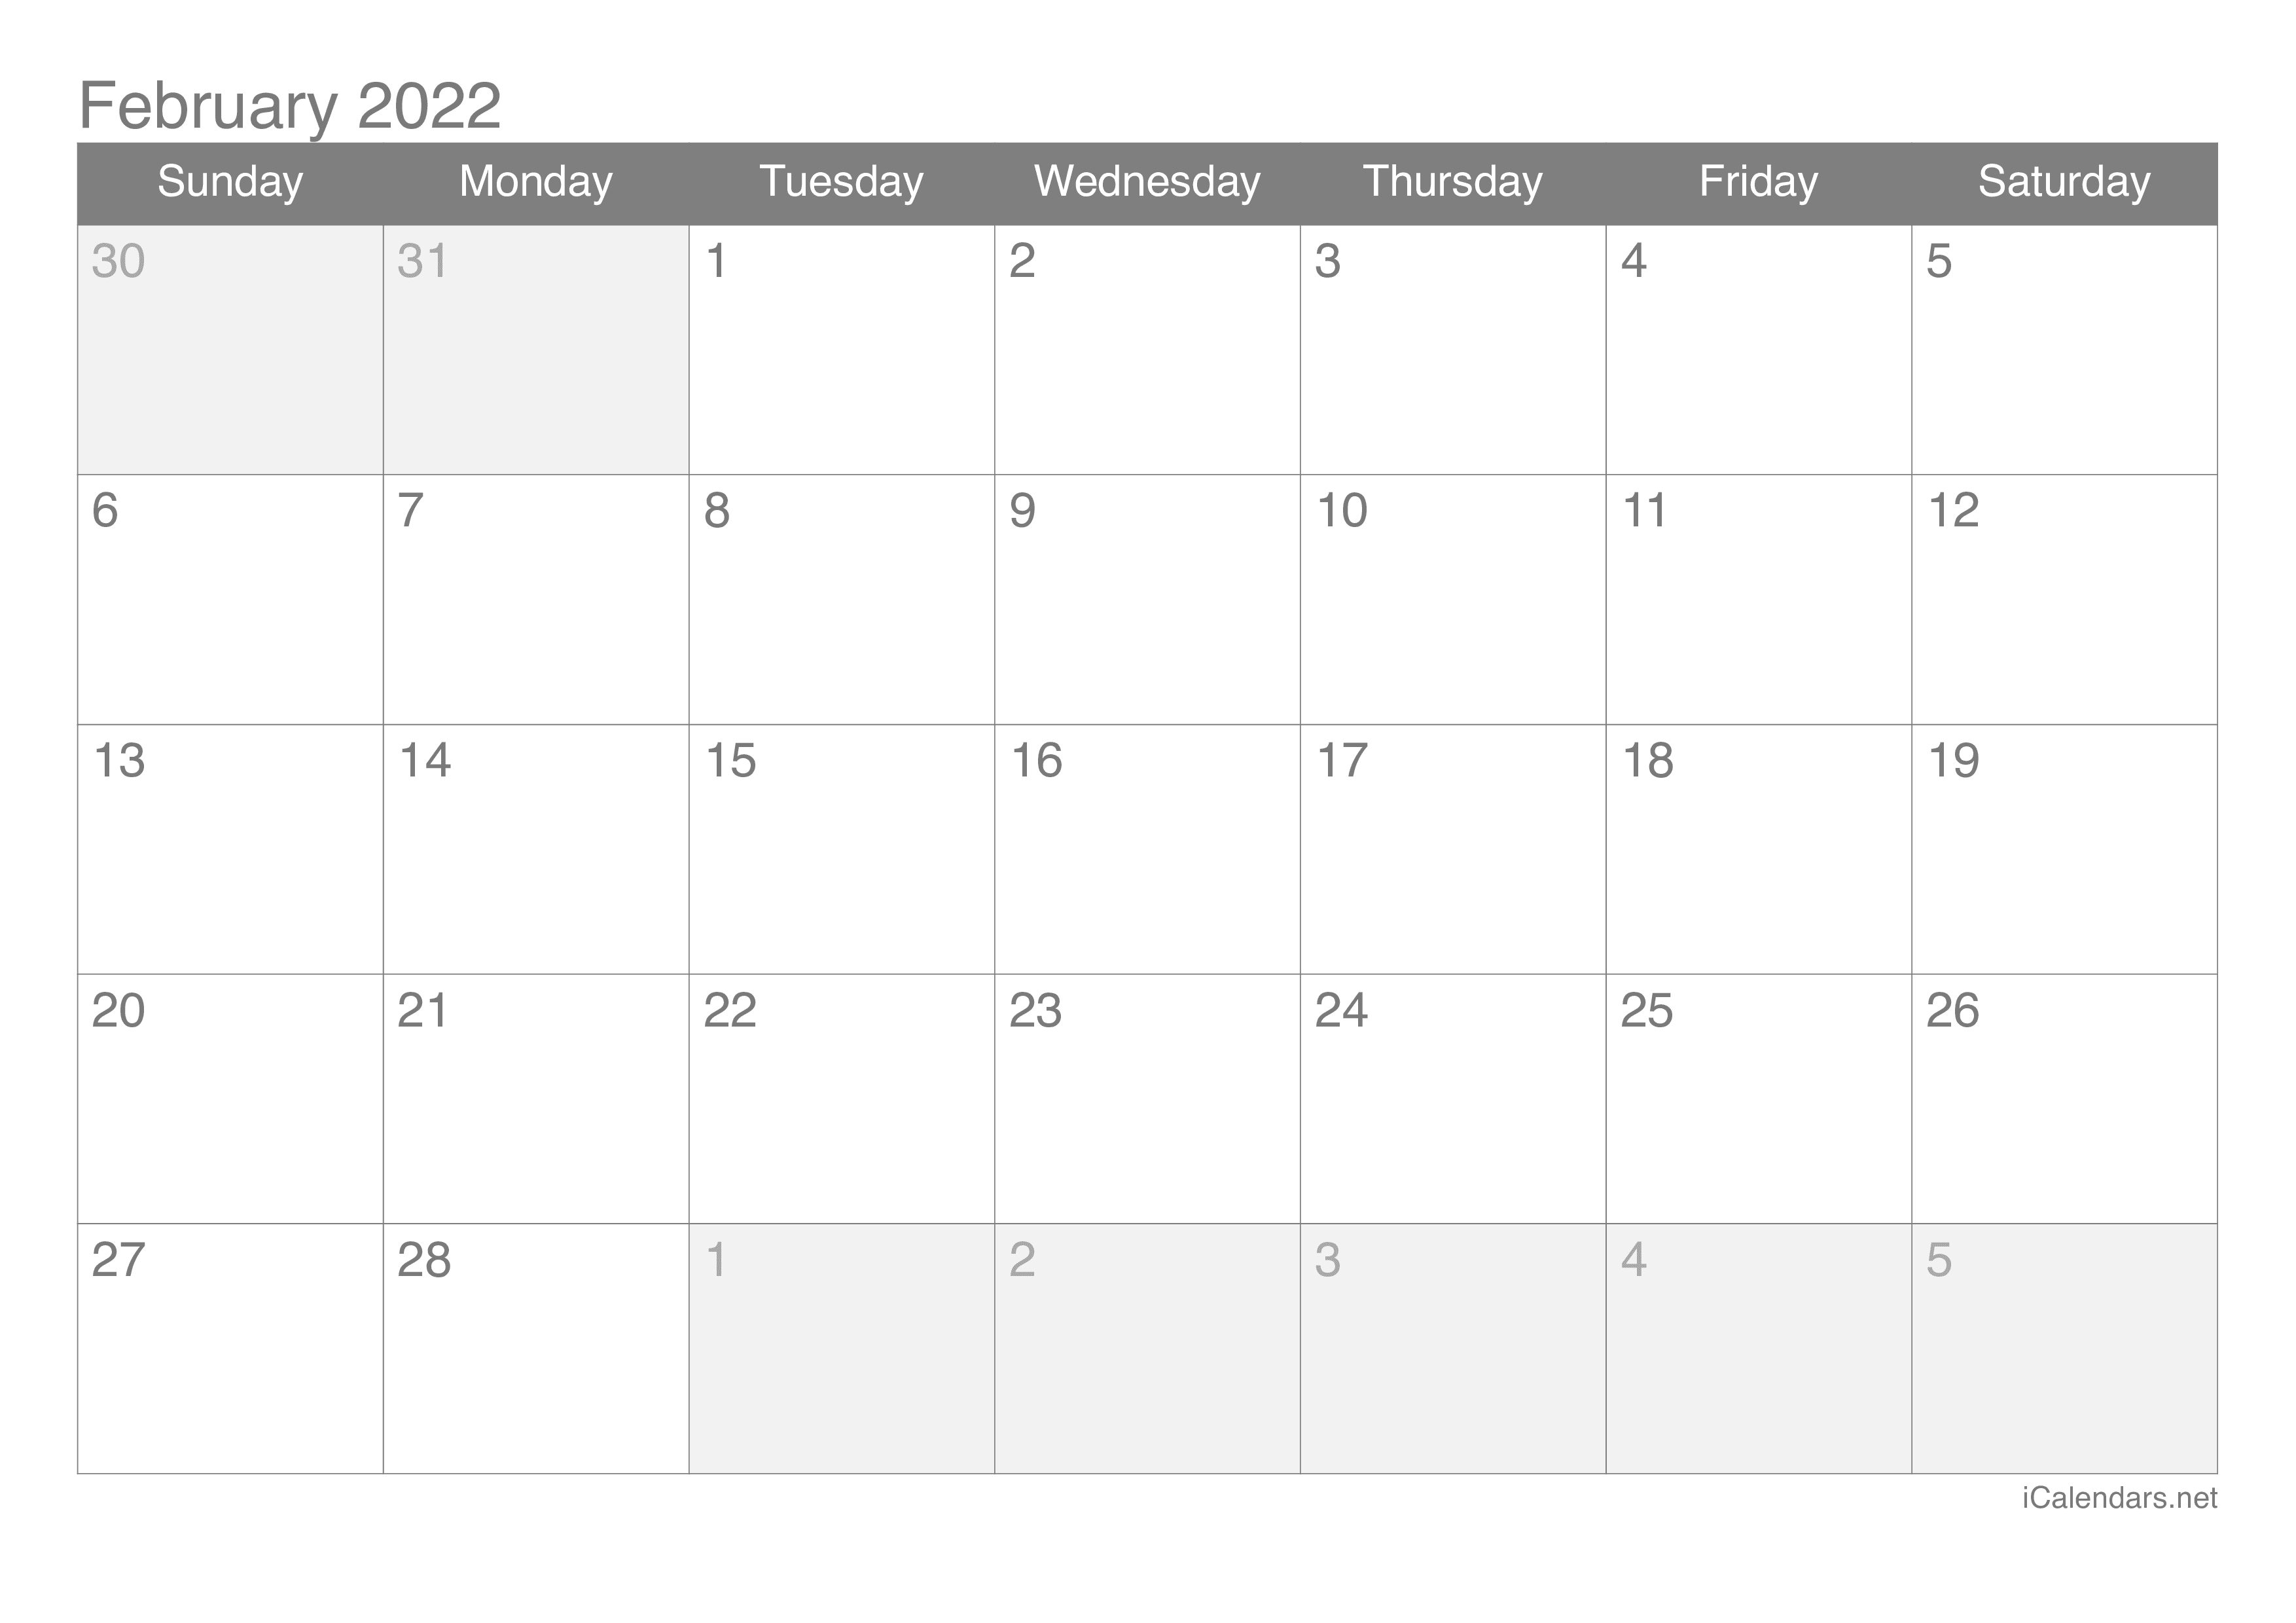 February Blank Calendar 2022 February 2022 Printable Calendar - Icalendars.net